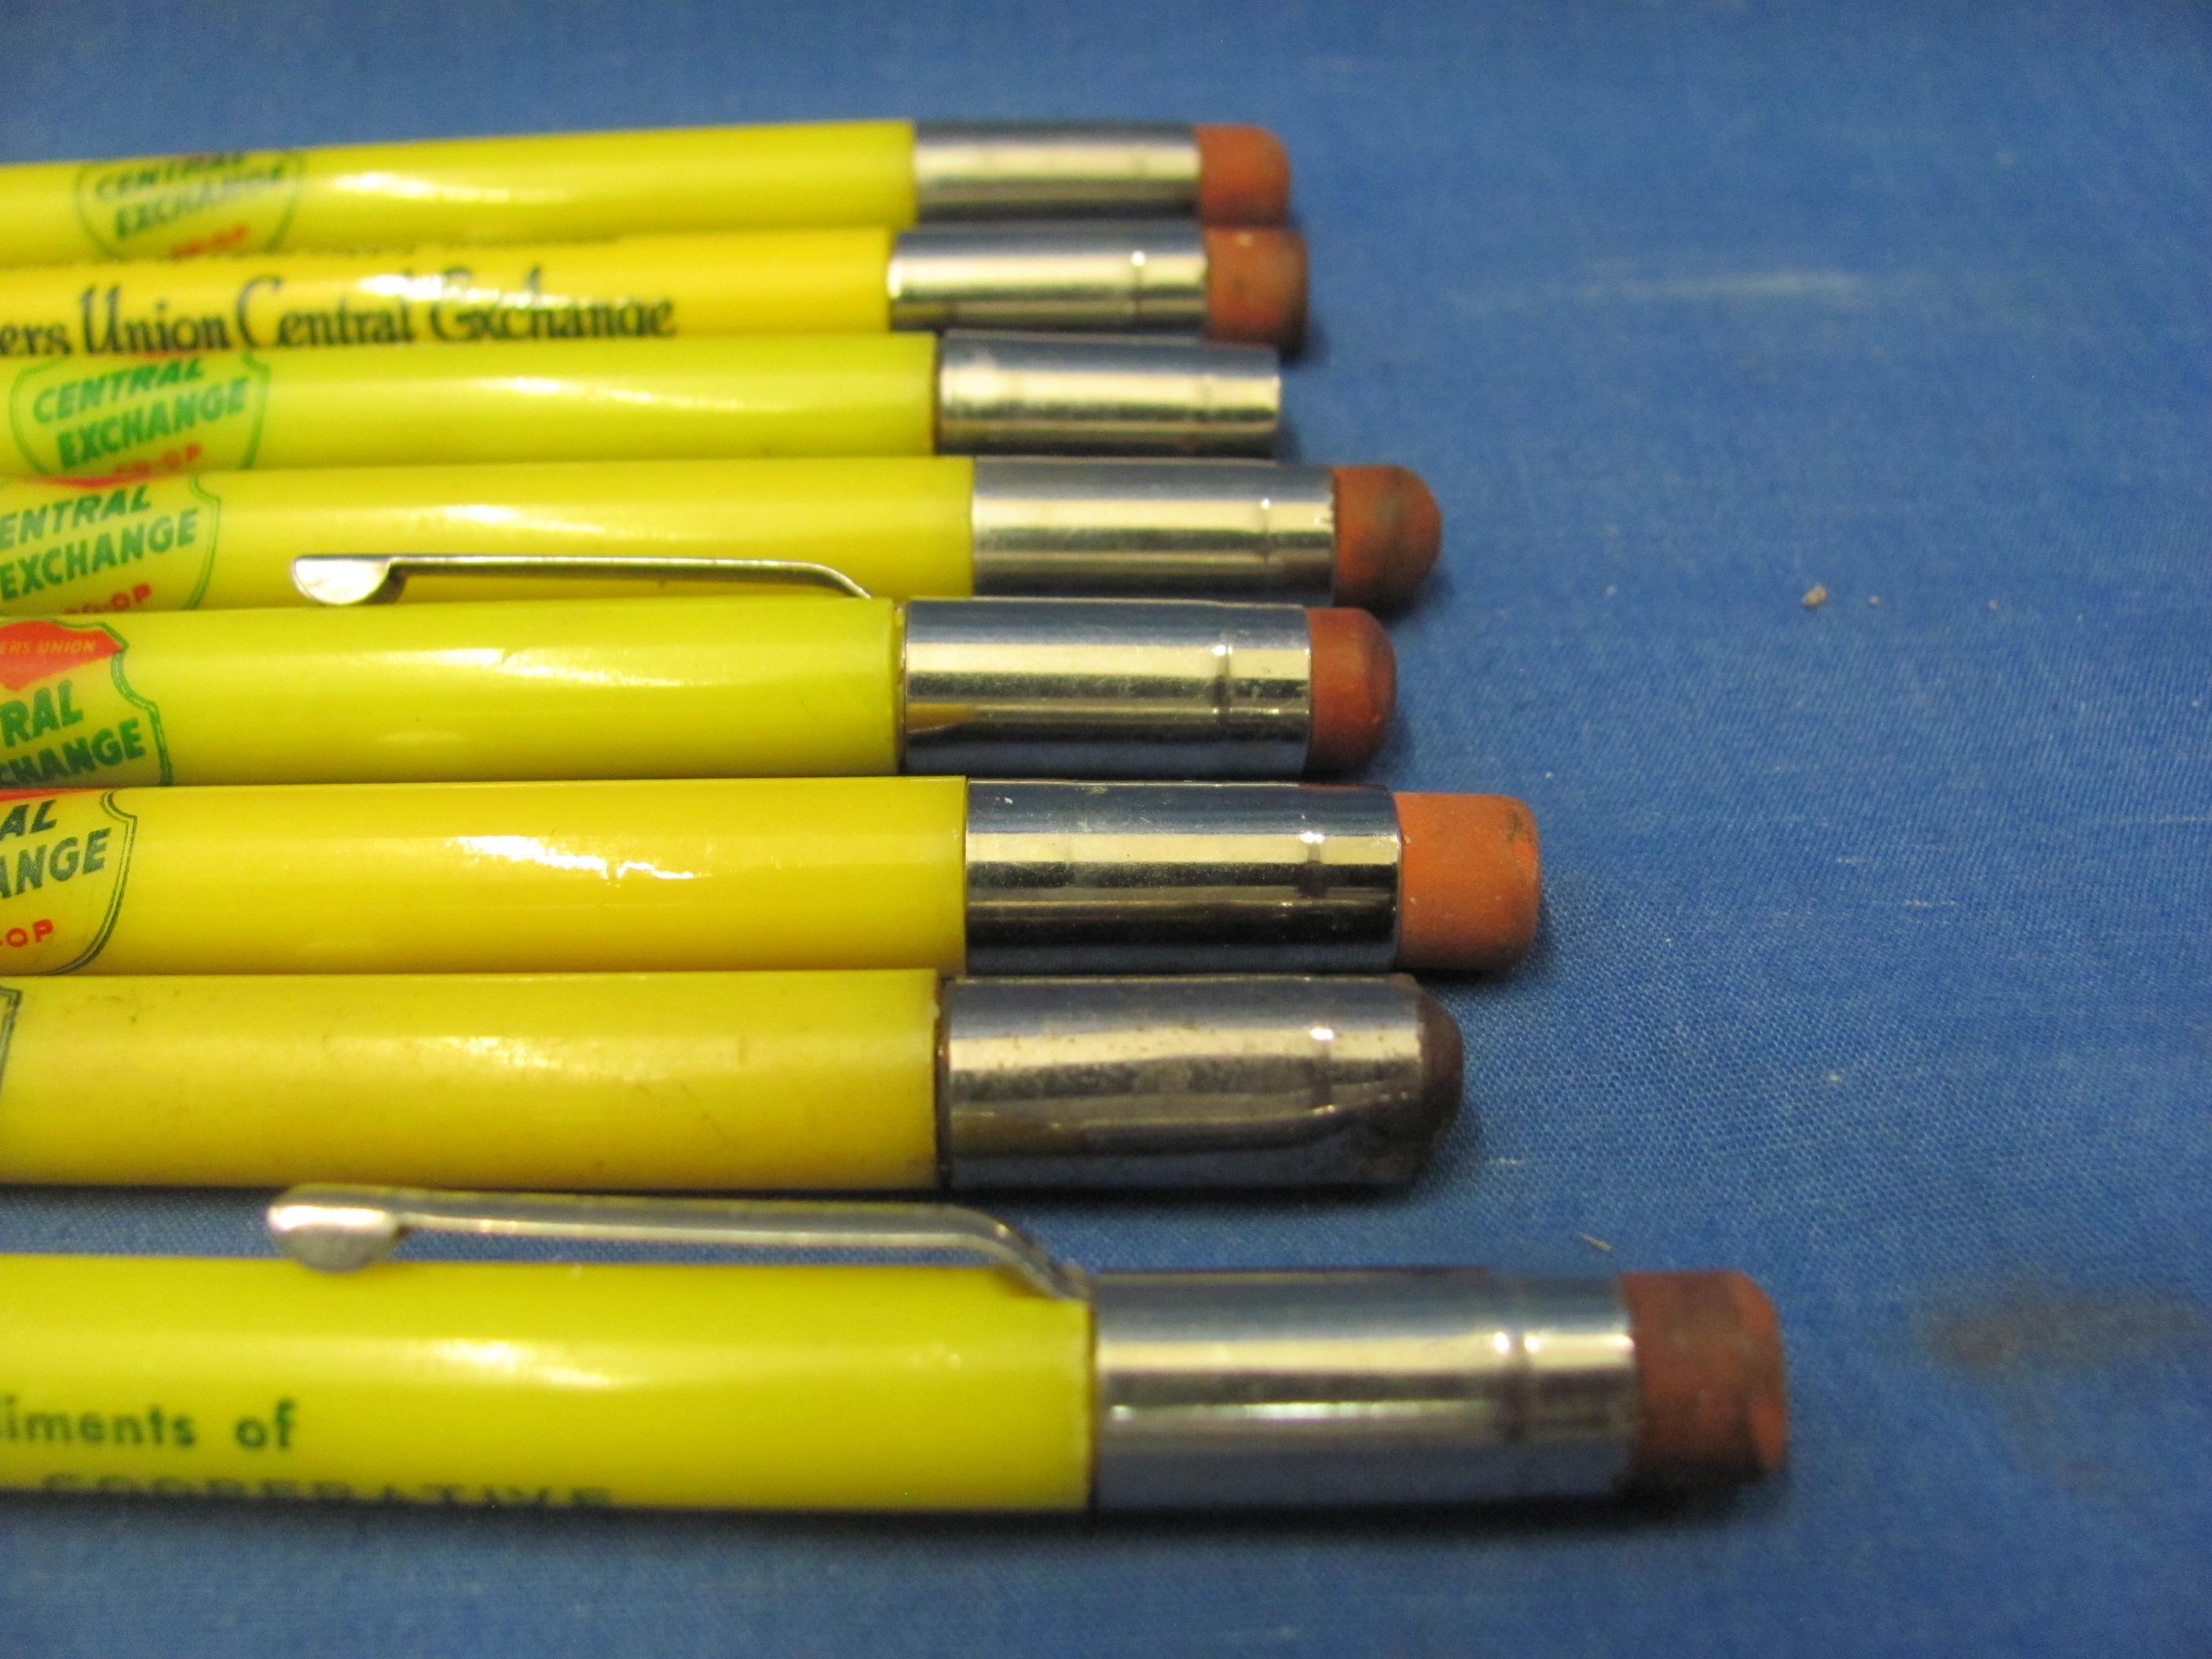 Farmer's Union Exchange Mechanical Pencils (8) – As Shown